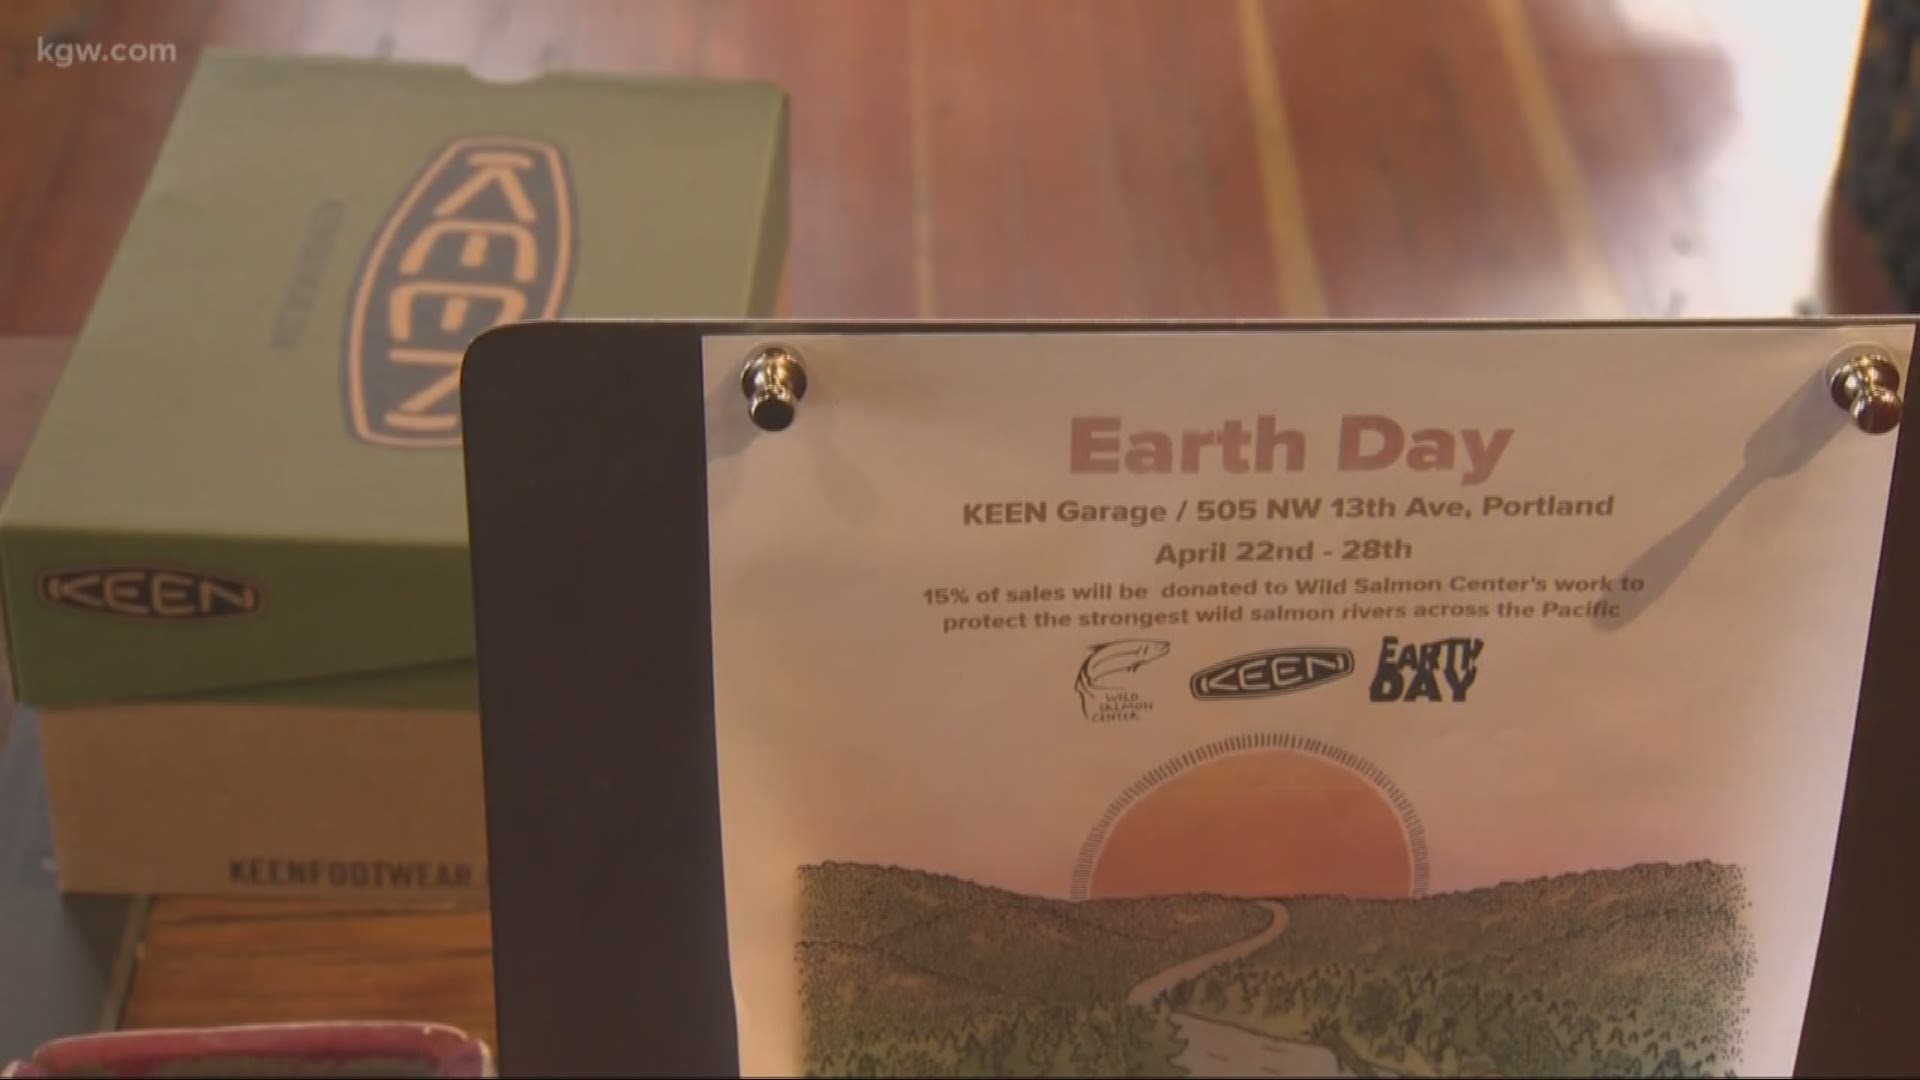 Earth Day Oregon is raising money for nonprofits.